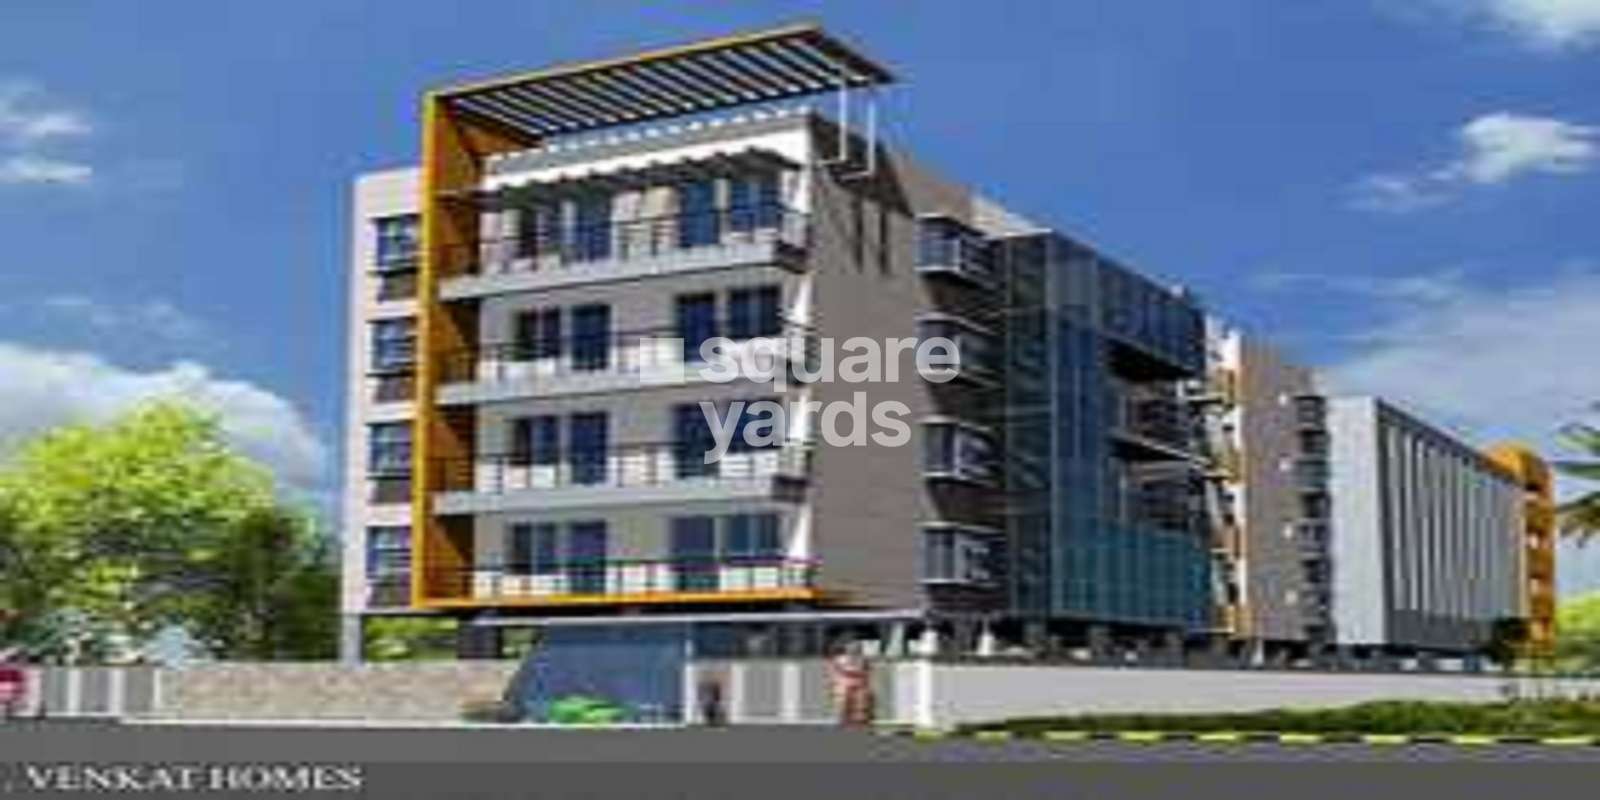 GM Venkat Homes Cover Image